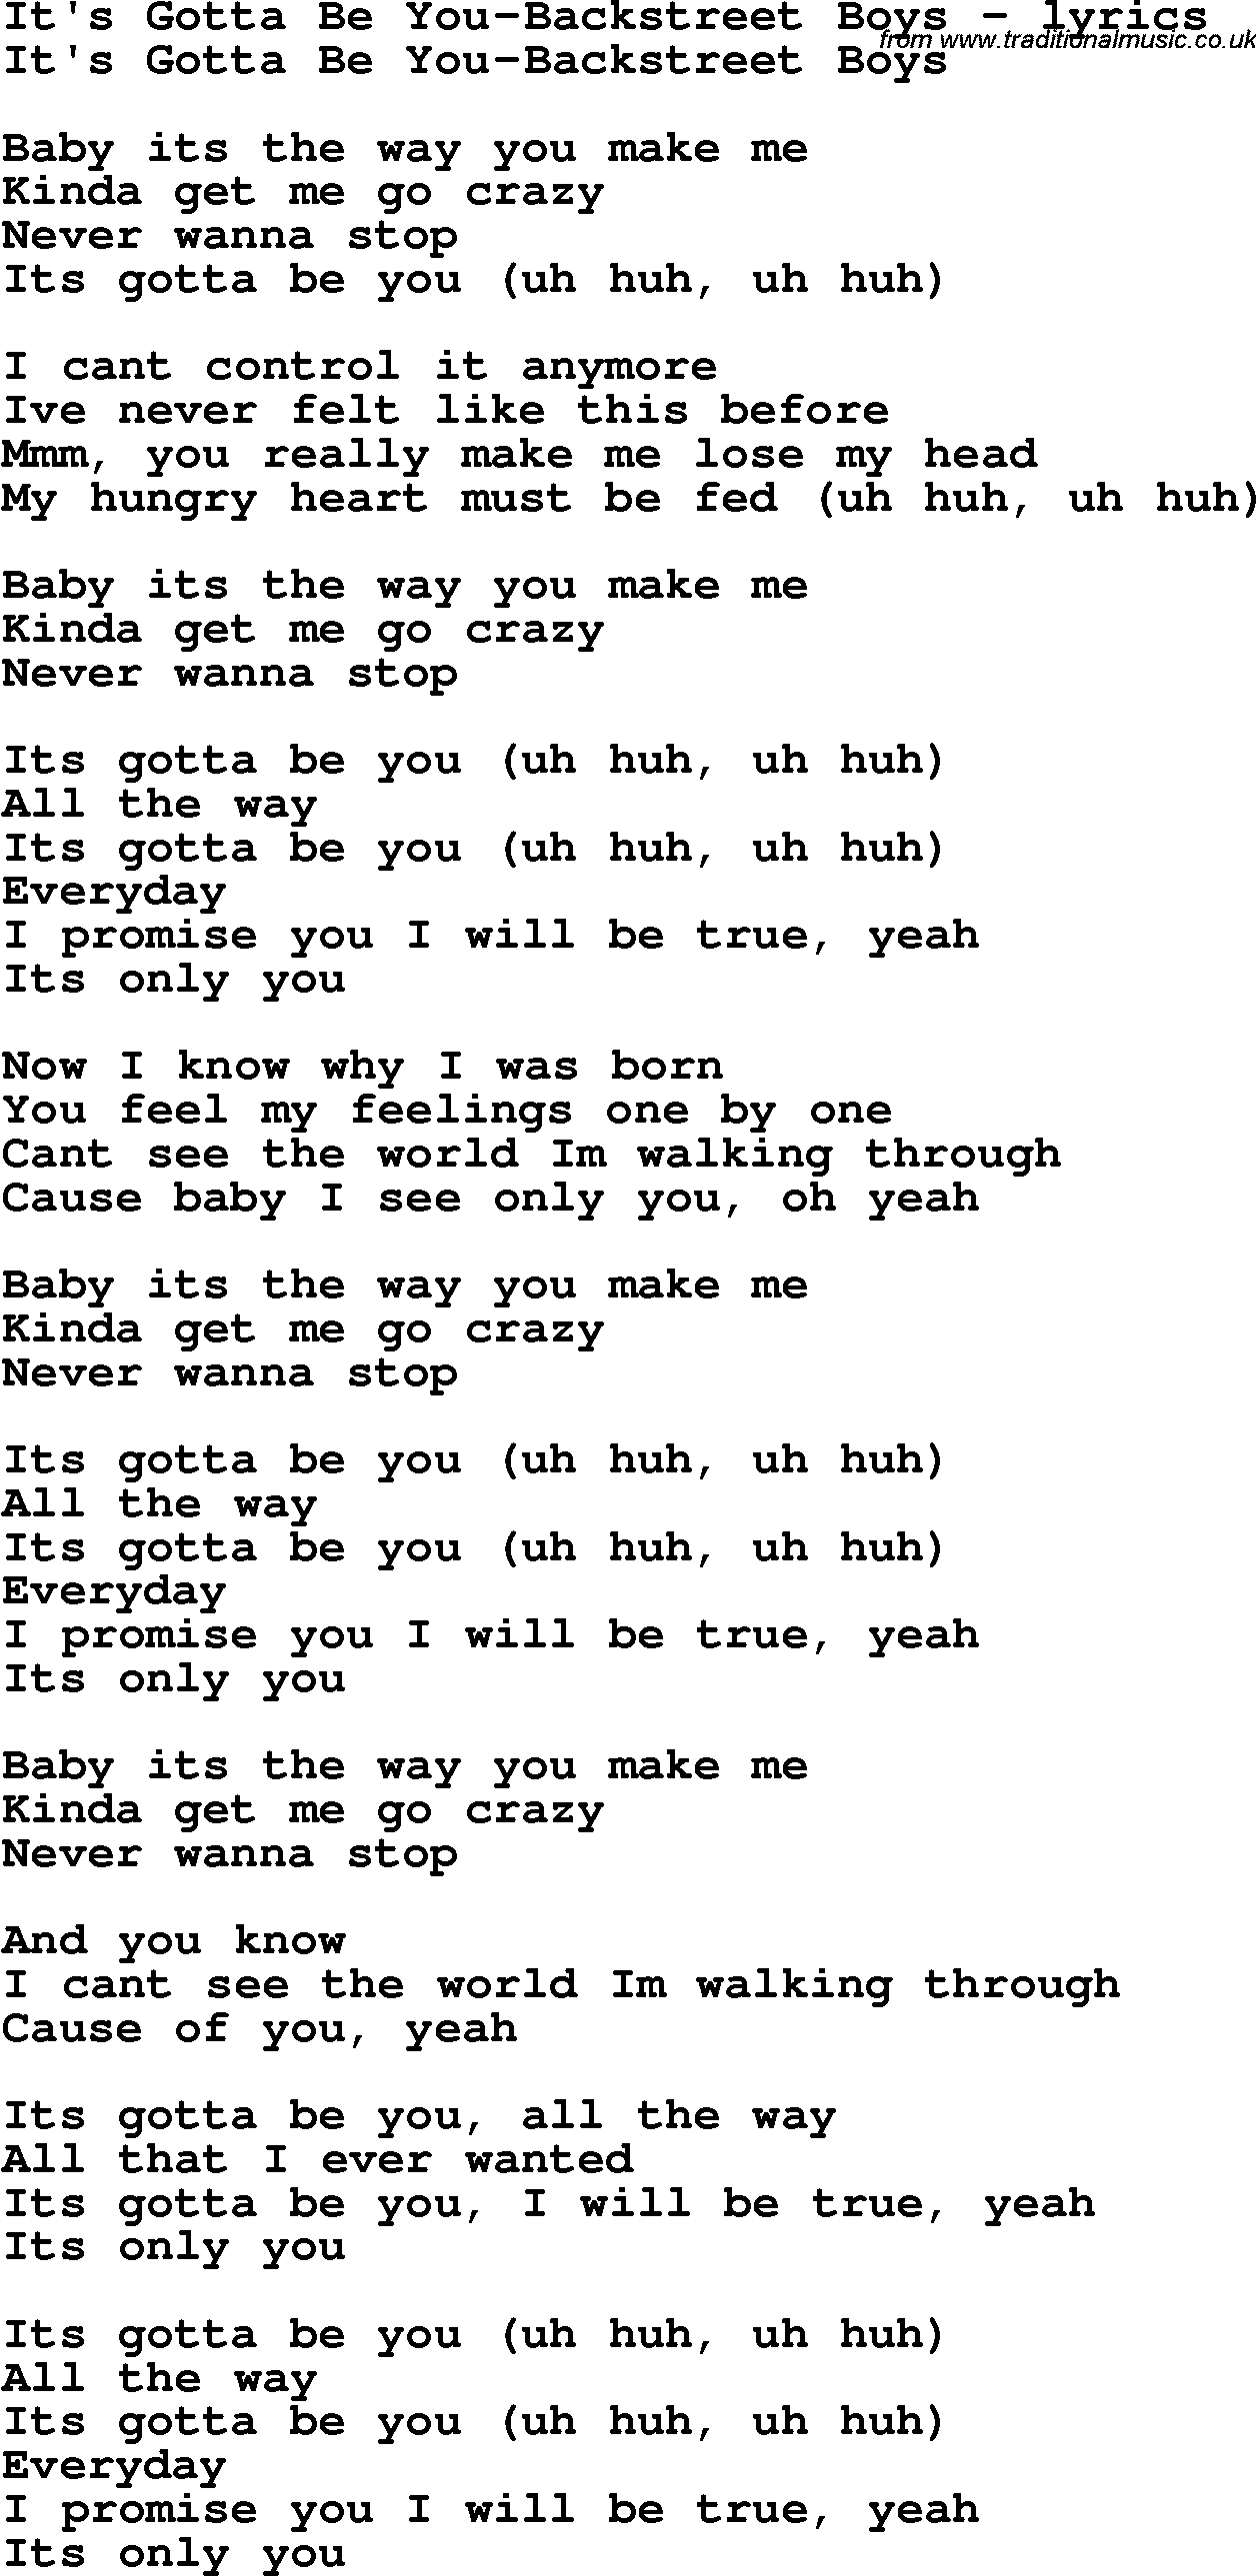 Love Song Lyrics for: It's Gotta Be You-Backstreet Boys